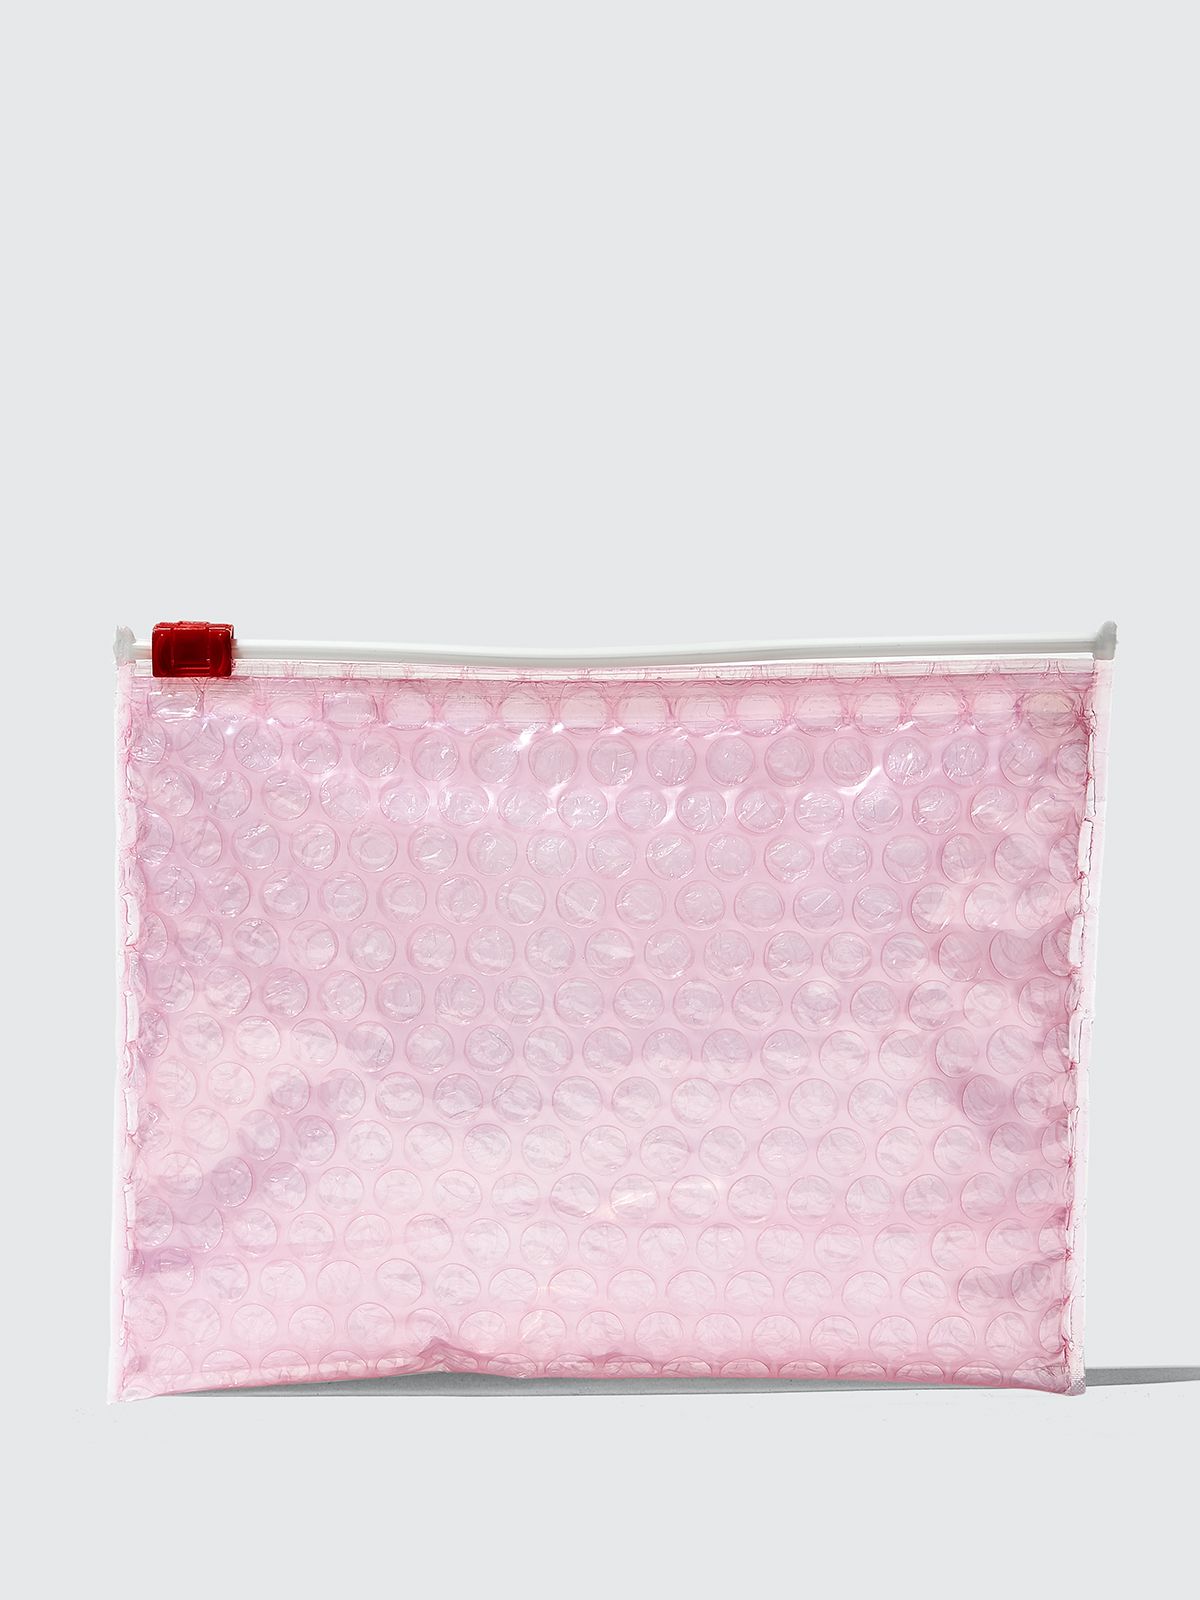 7 cute makeup bags that make traveling suck a little less